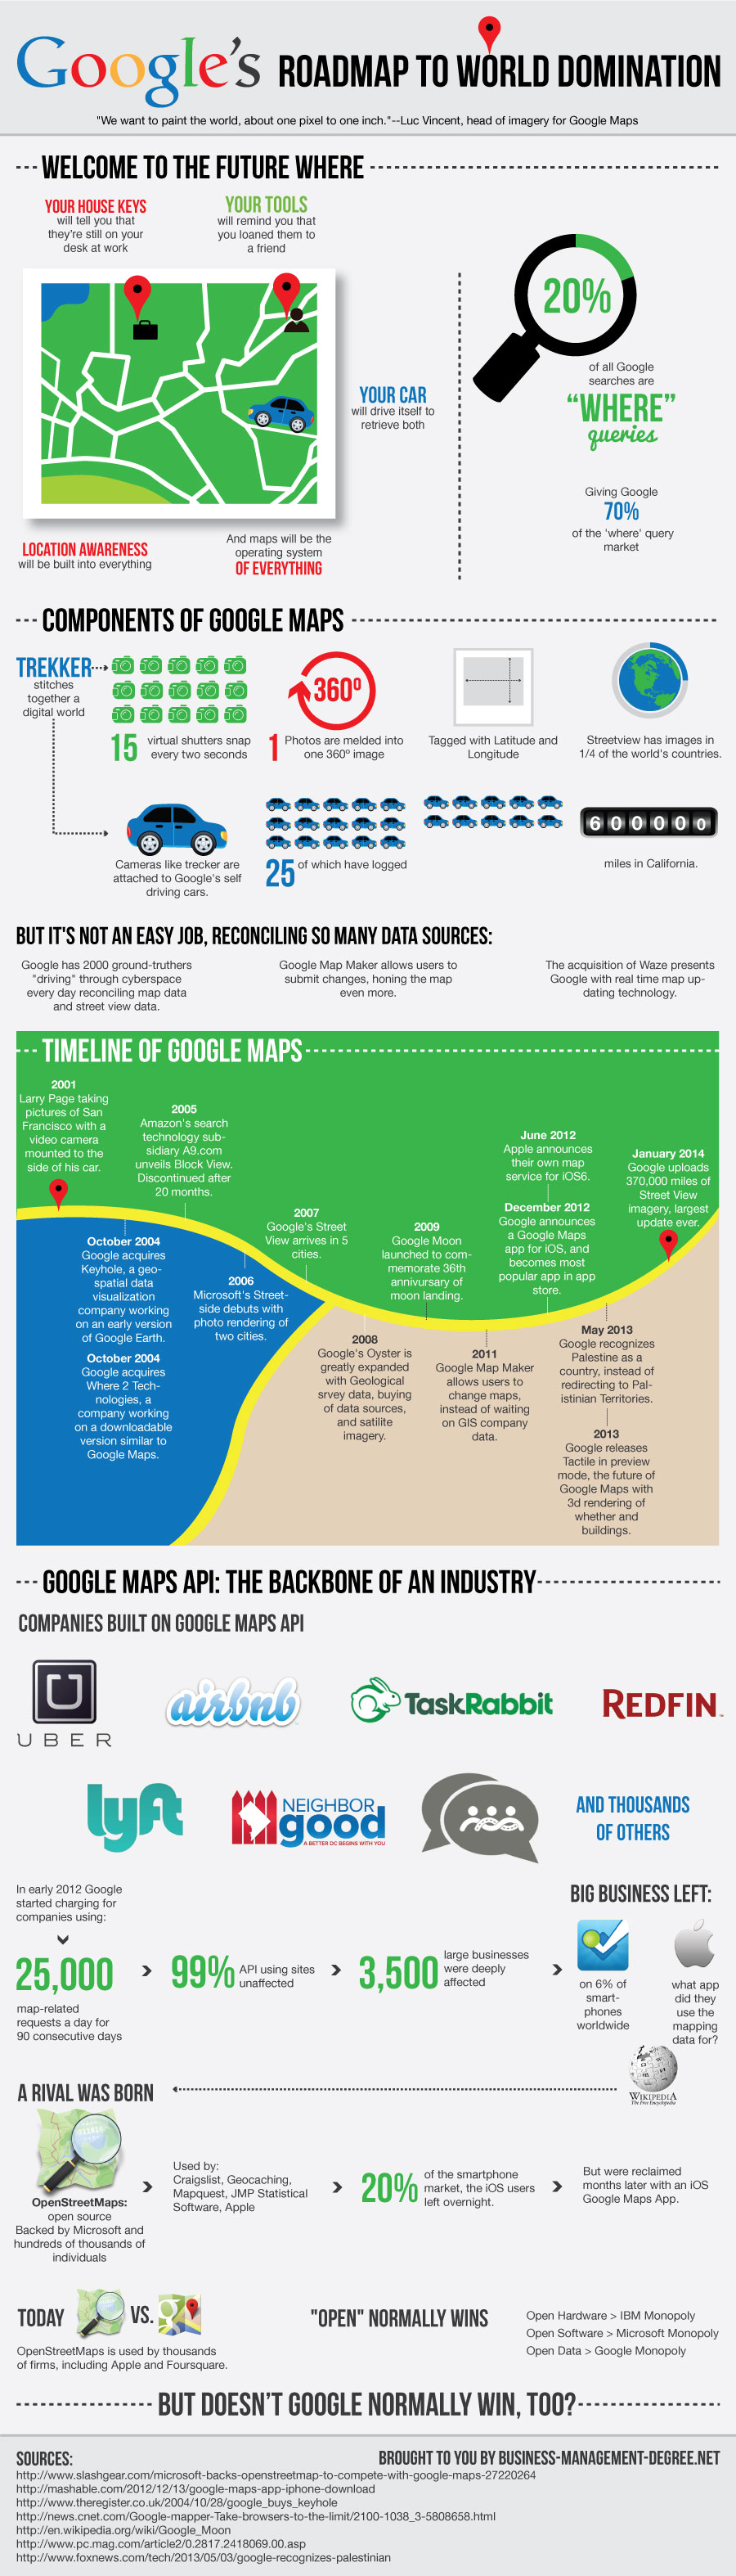 Google's Roadmap to World Domination